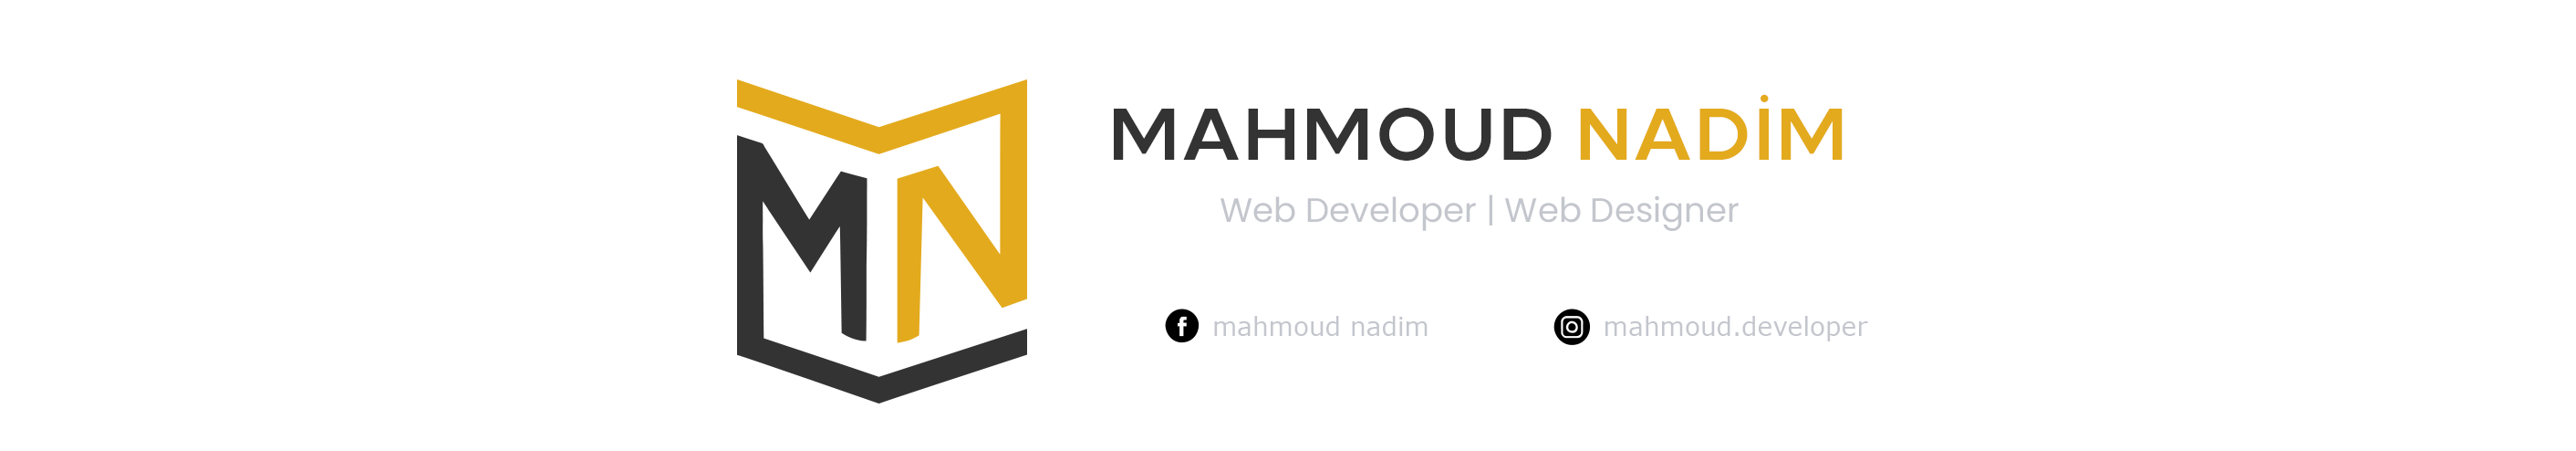 Profil-Banner von Mahmoud Nadim